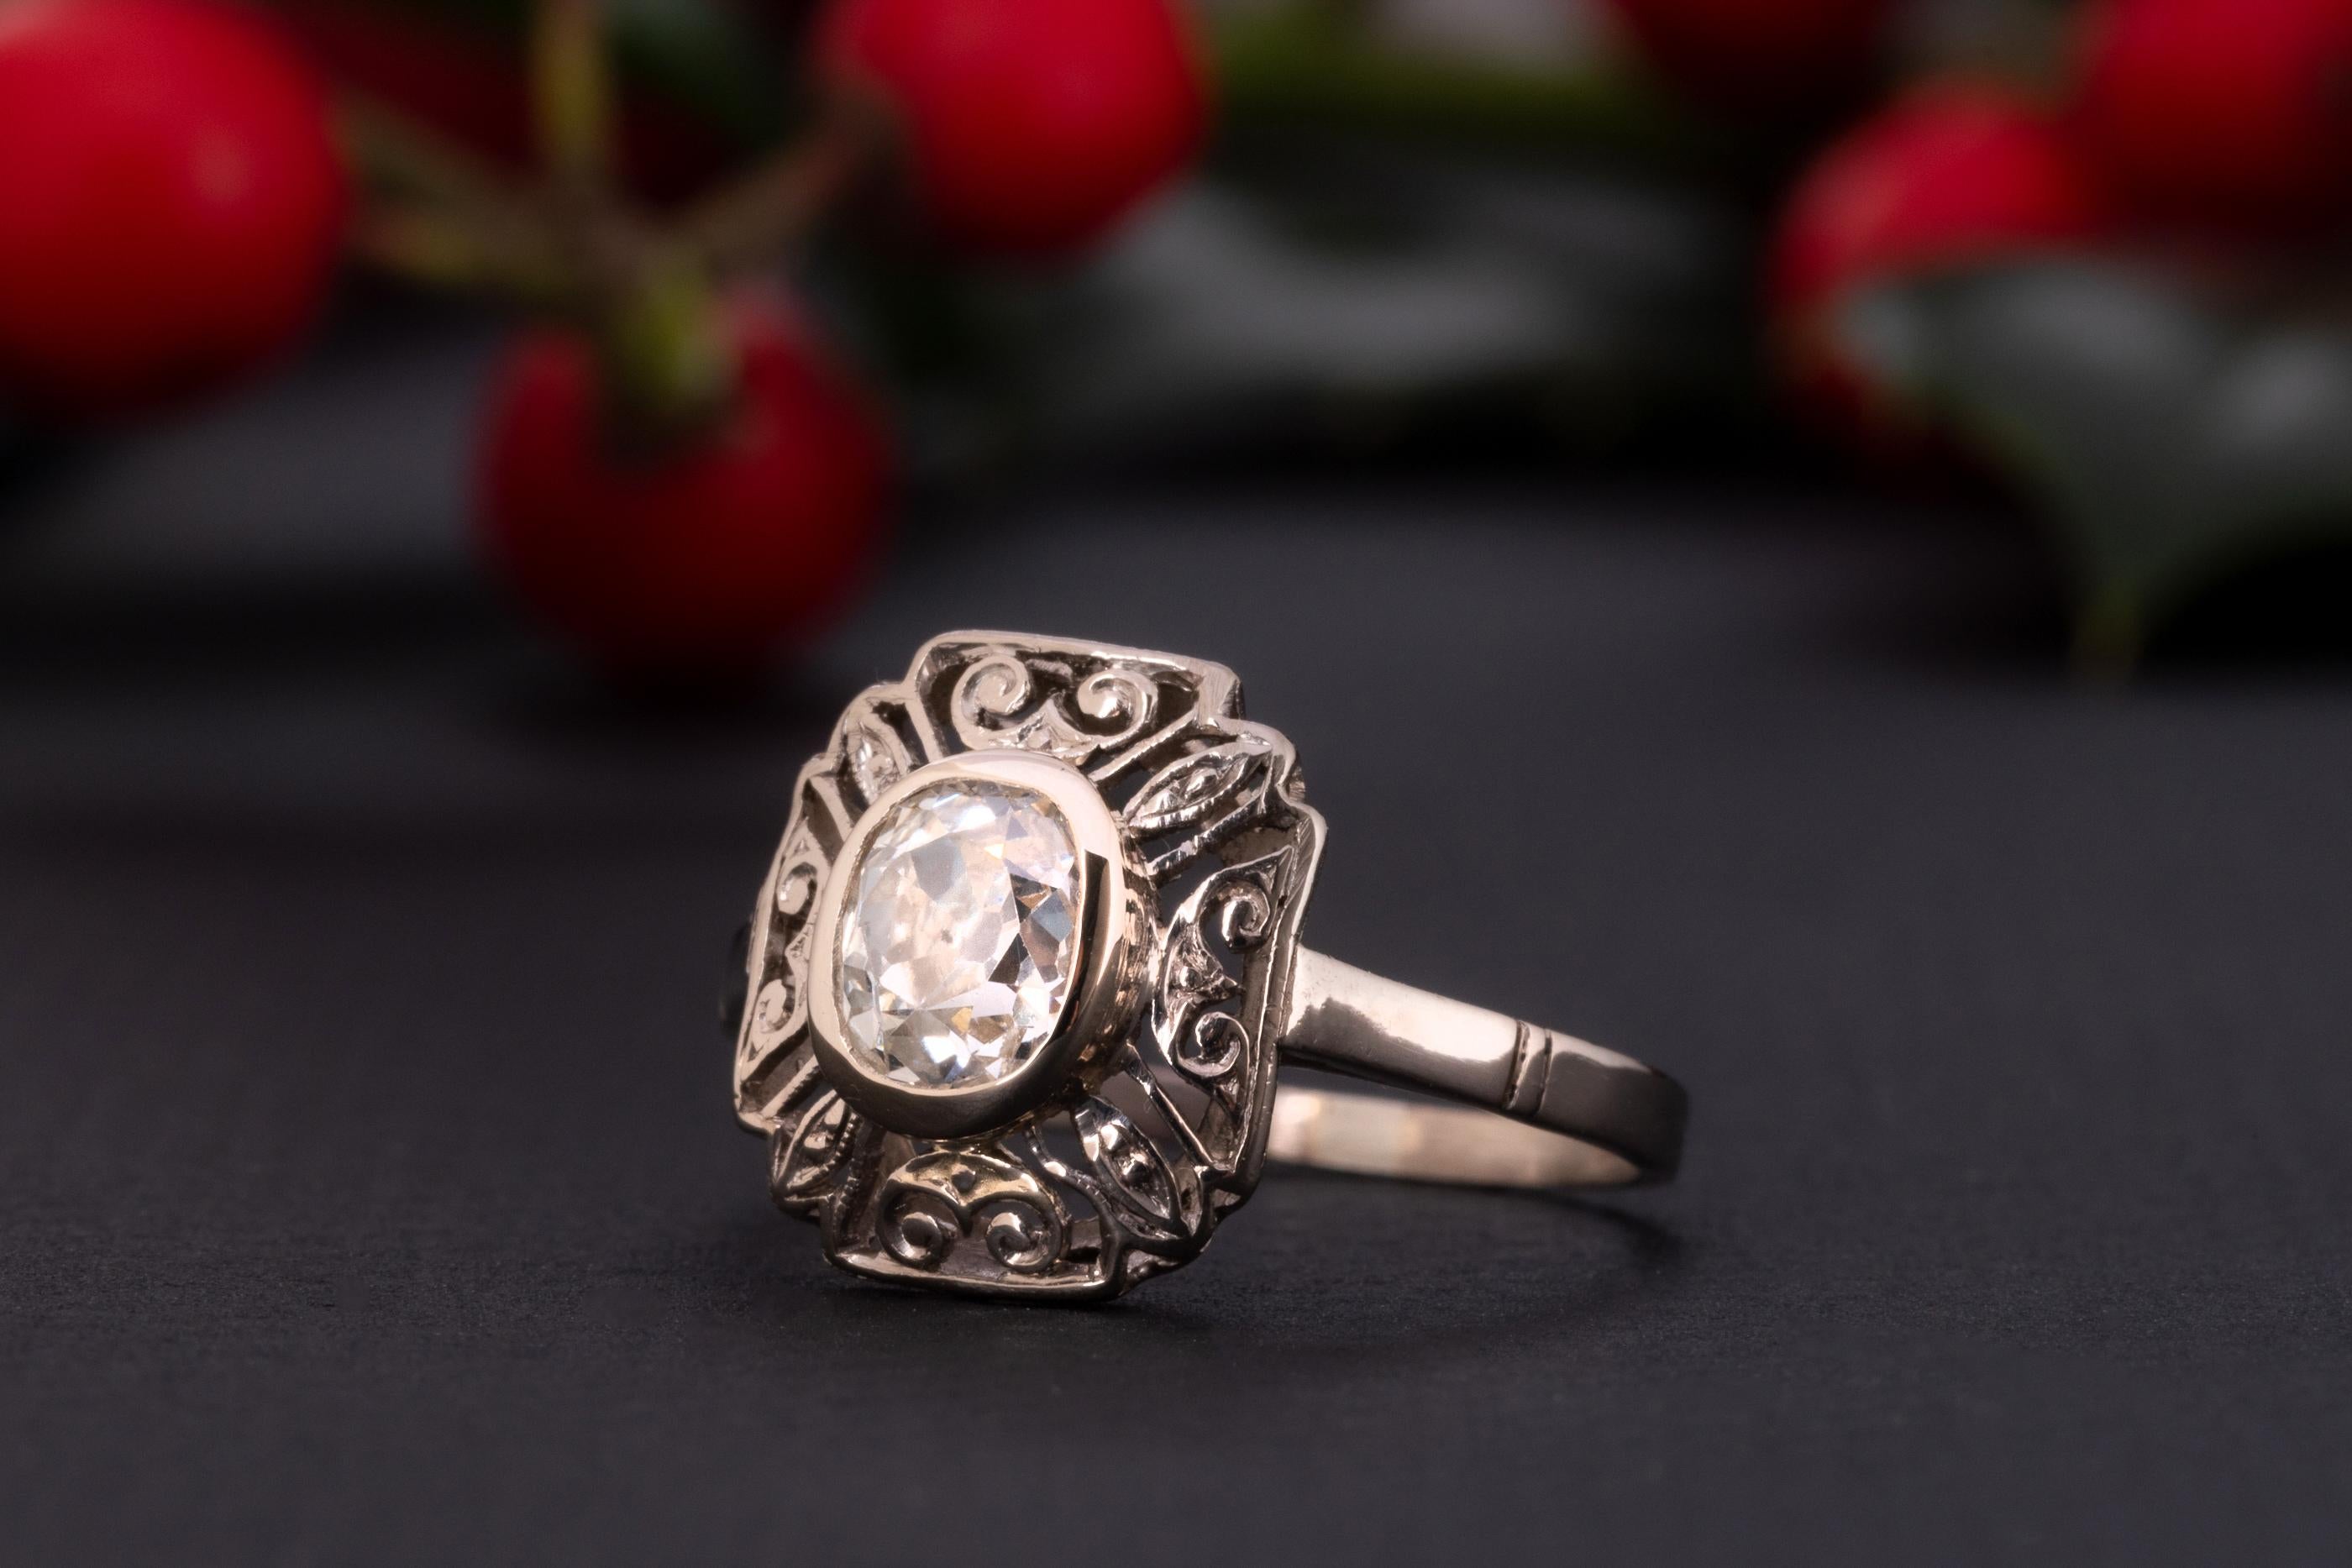 Women's Antique Engagement 1.1 CT Diamond Solitaire Ring, Old European Cut Diamond Ring